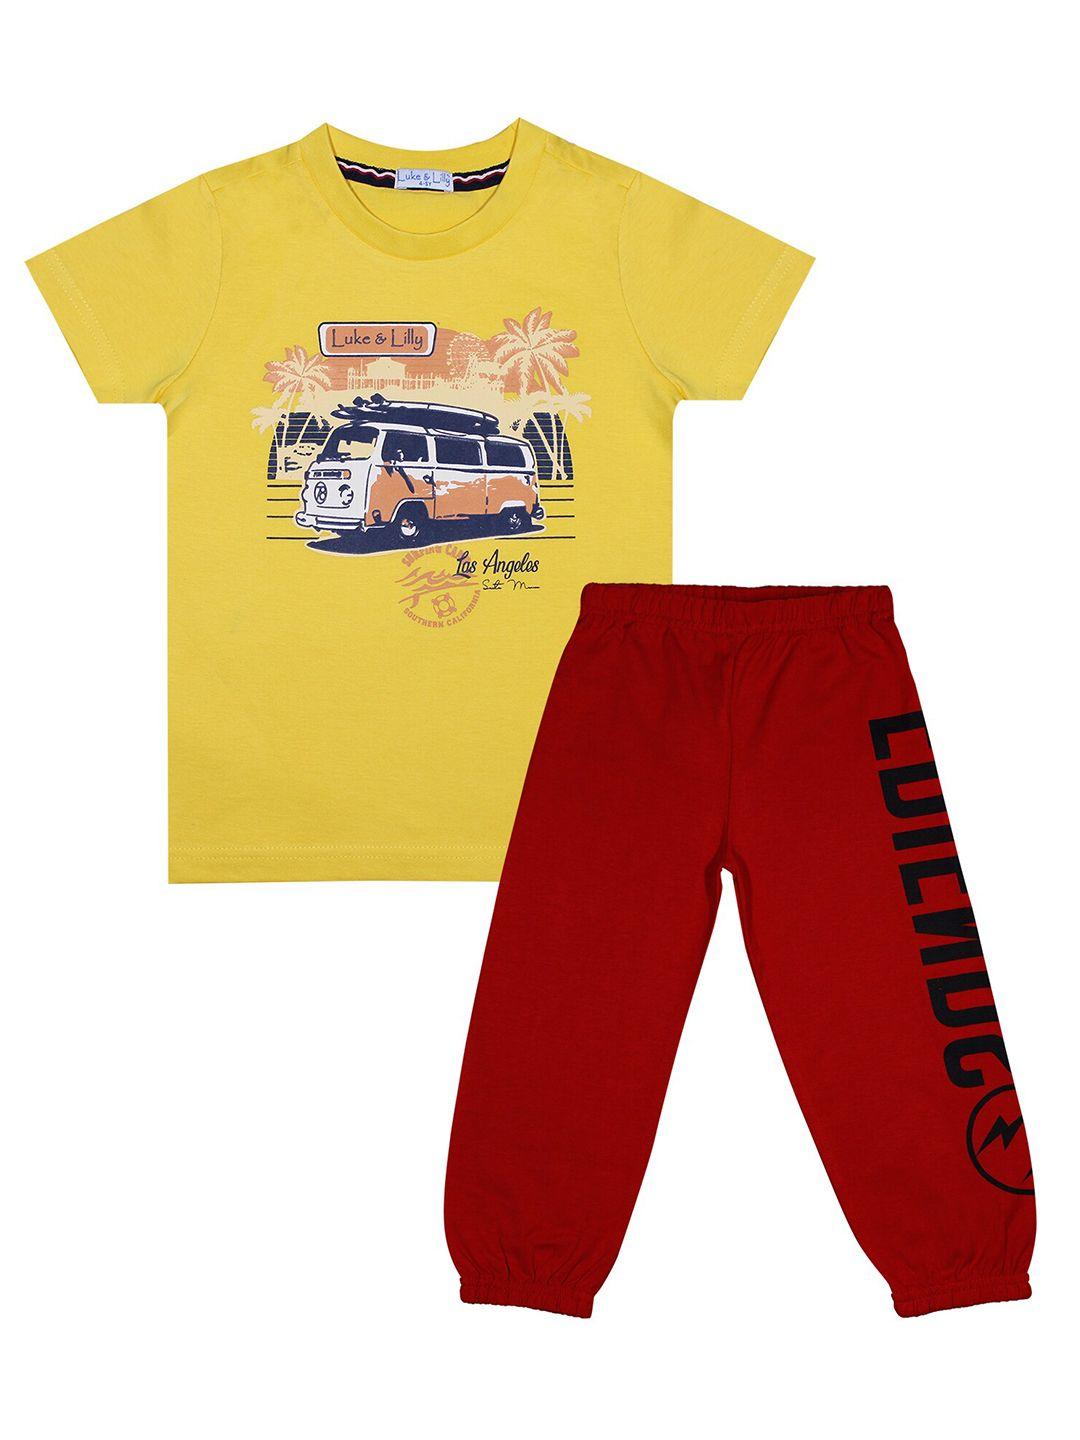 luke-&-lilly-boys-maroon-&-yellow-printed-t-shirt-&-pyjamas